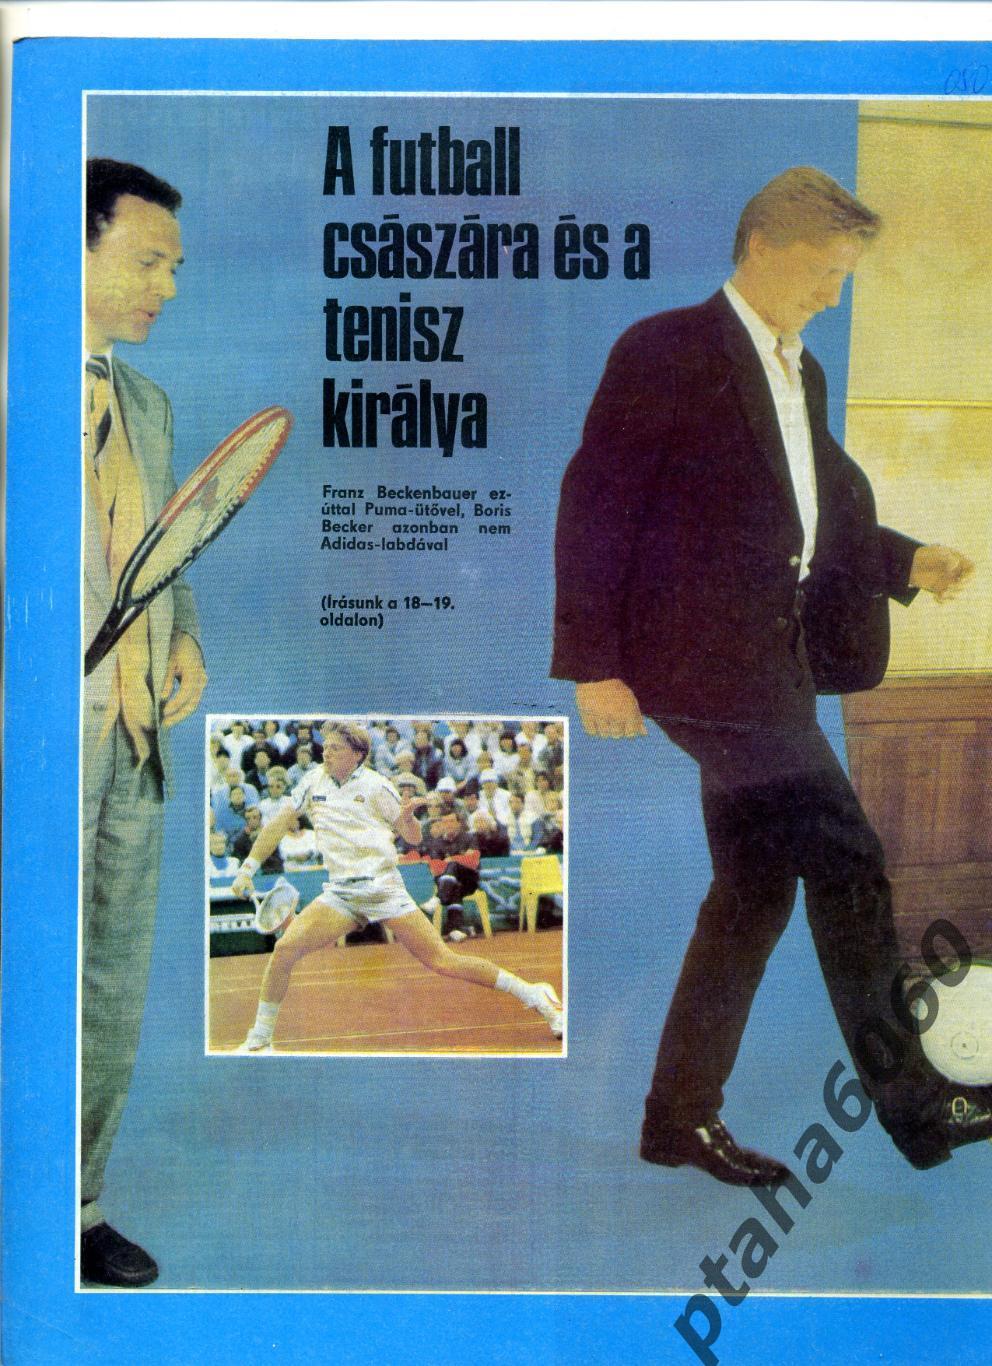 КЕПЕШ СПОРТ-Спортивный журнал Венгрия- №45 1986г 1